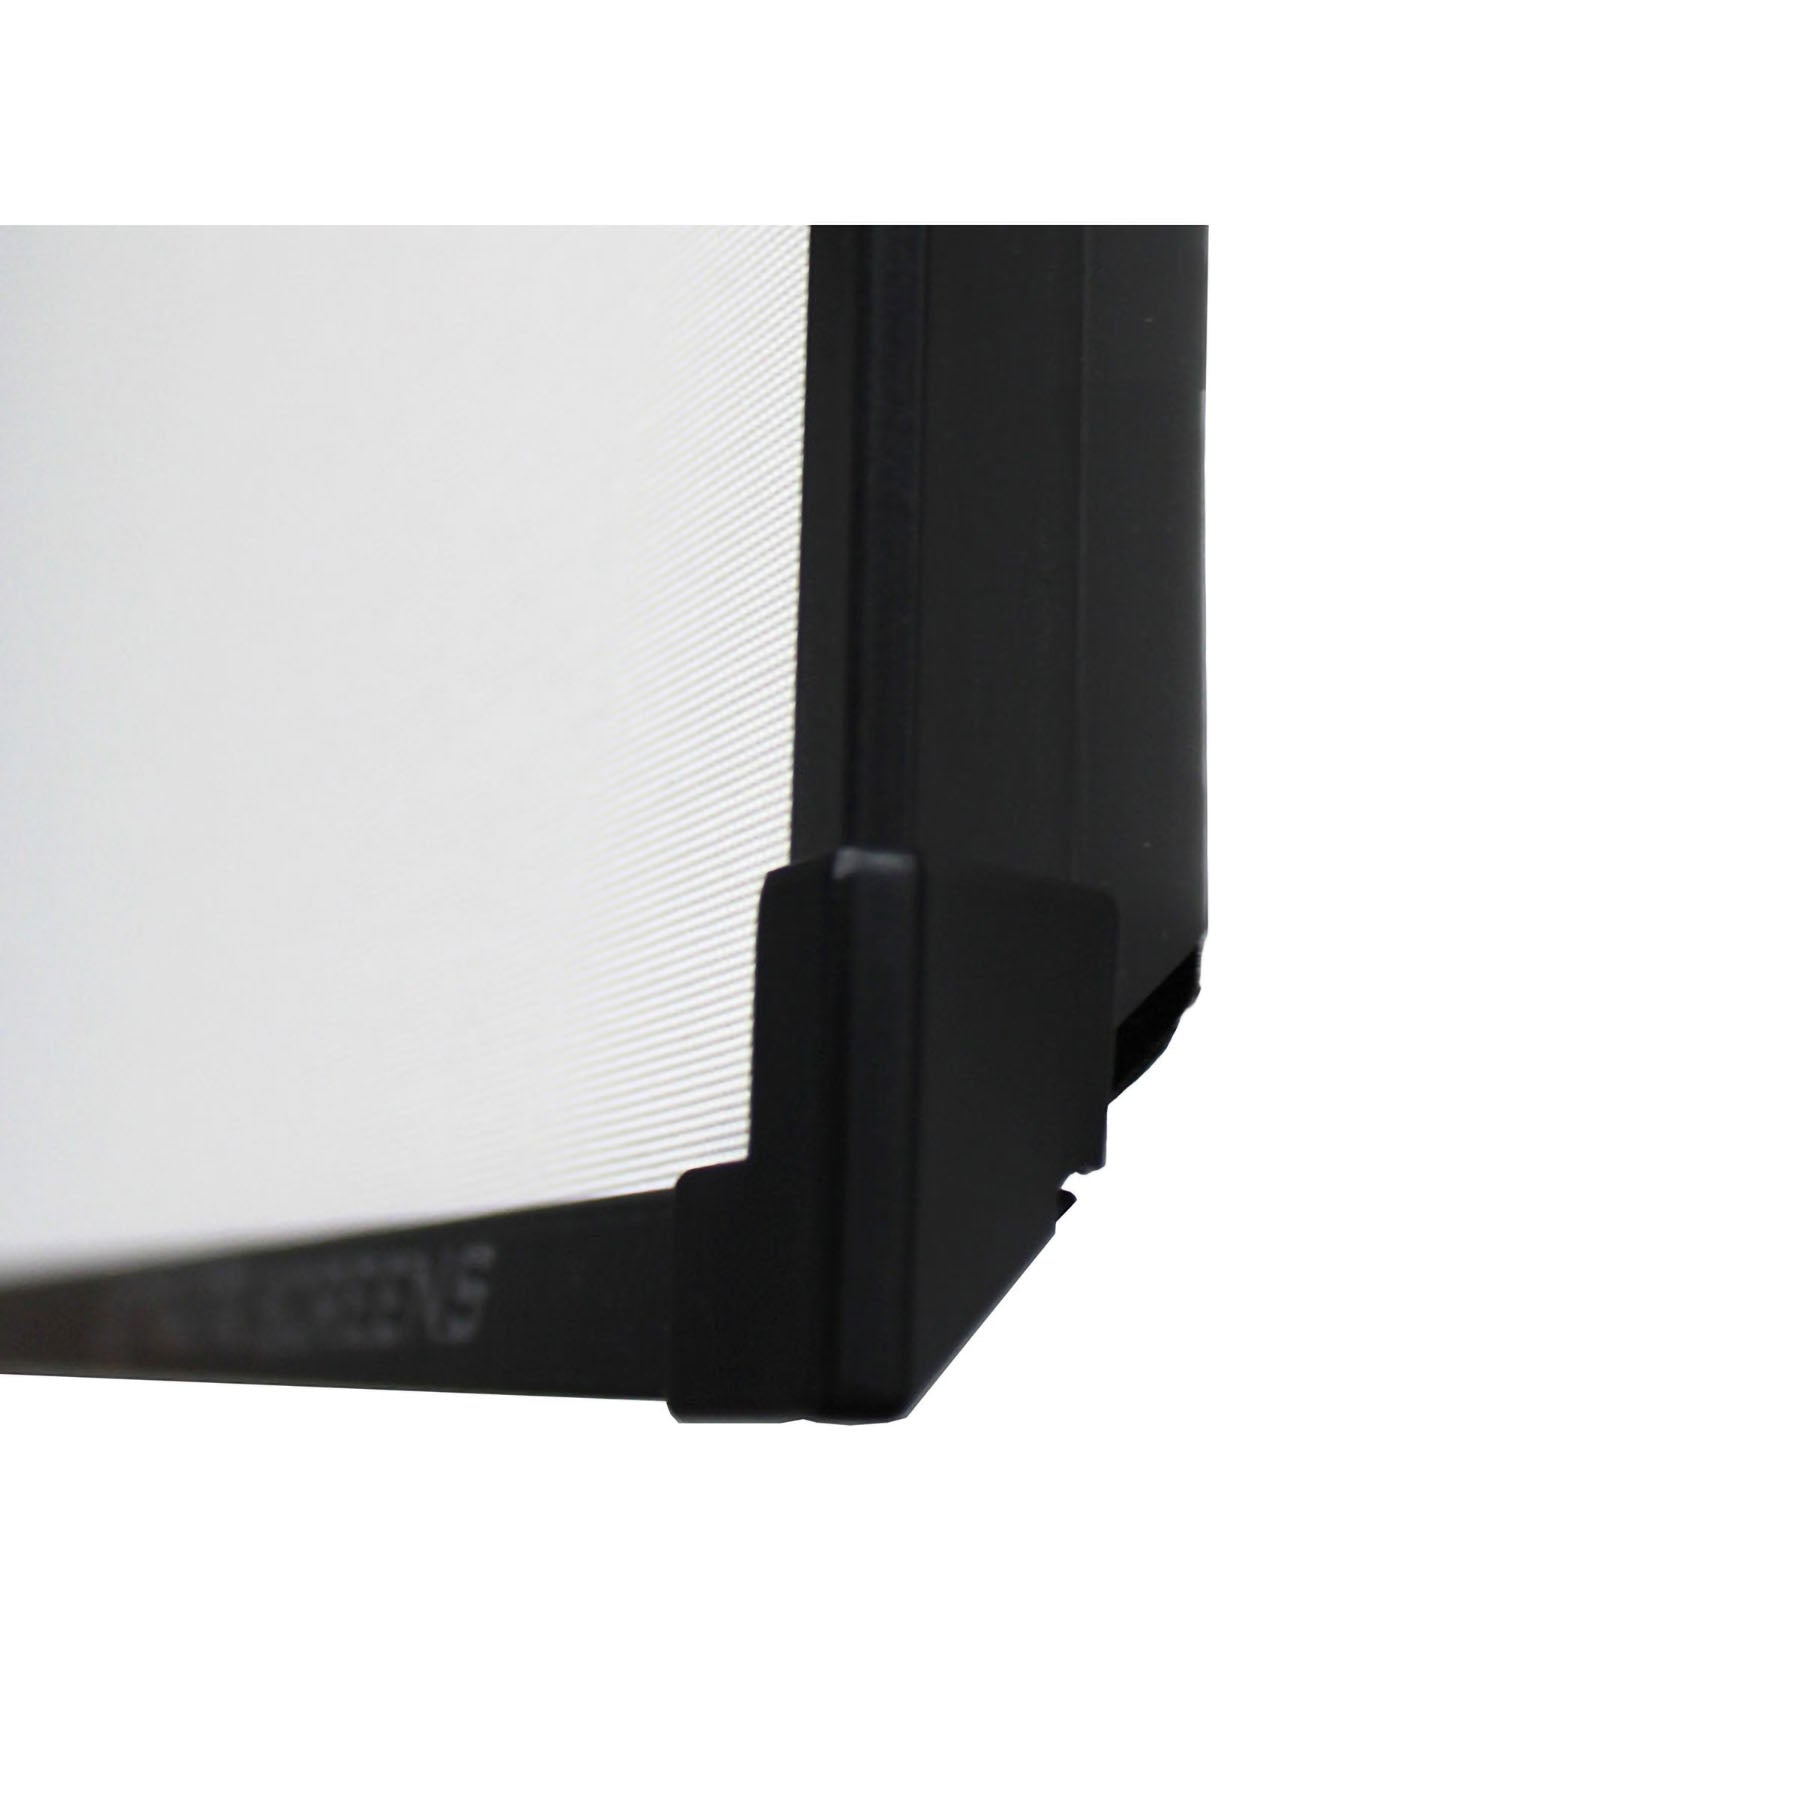 Elite Screens AR150H2-AUHD 150" Aeon AcousticPro UHD, Acoustically Transparent, 16:9 Edge Free Frame